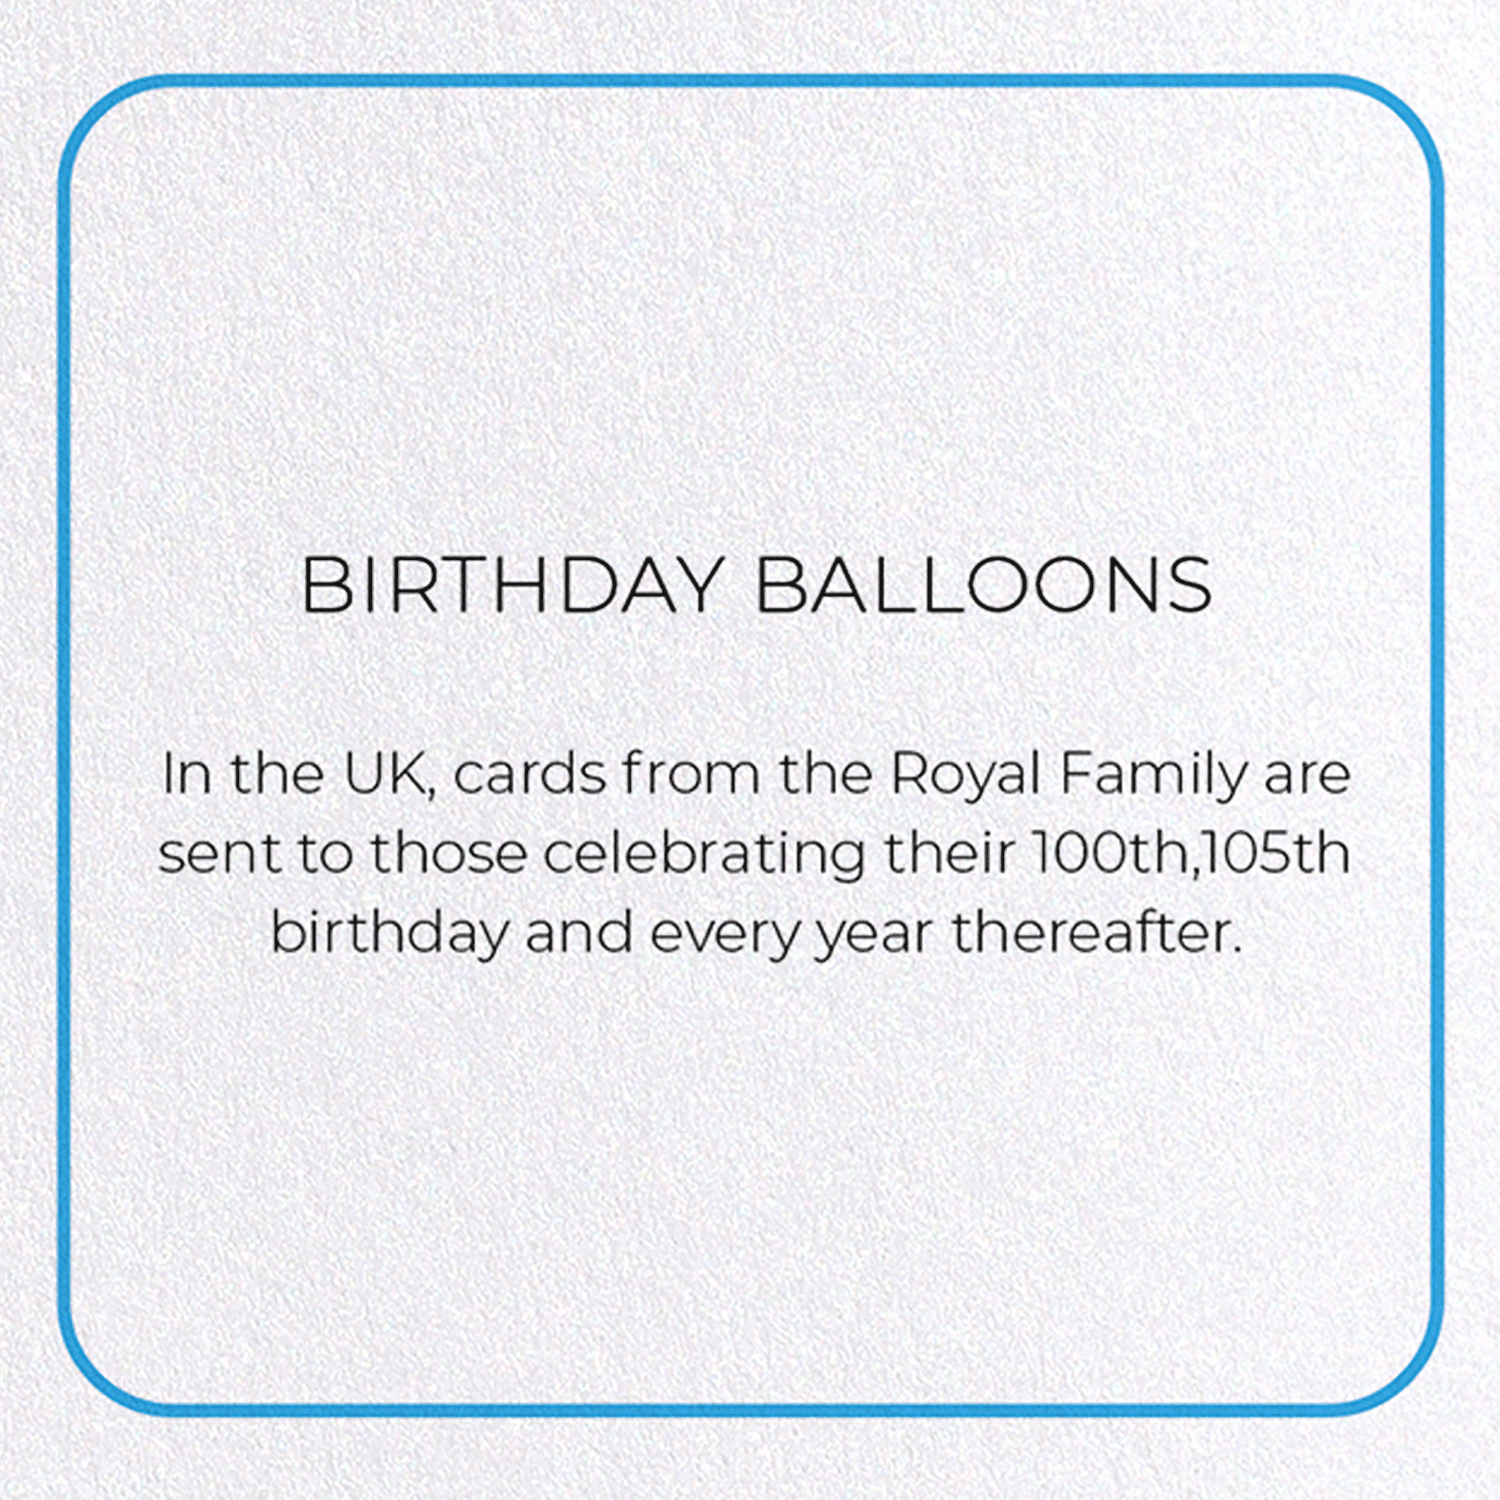 BIRTHDAY BALLOONS: Photo Greeting Card